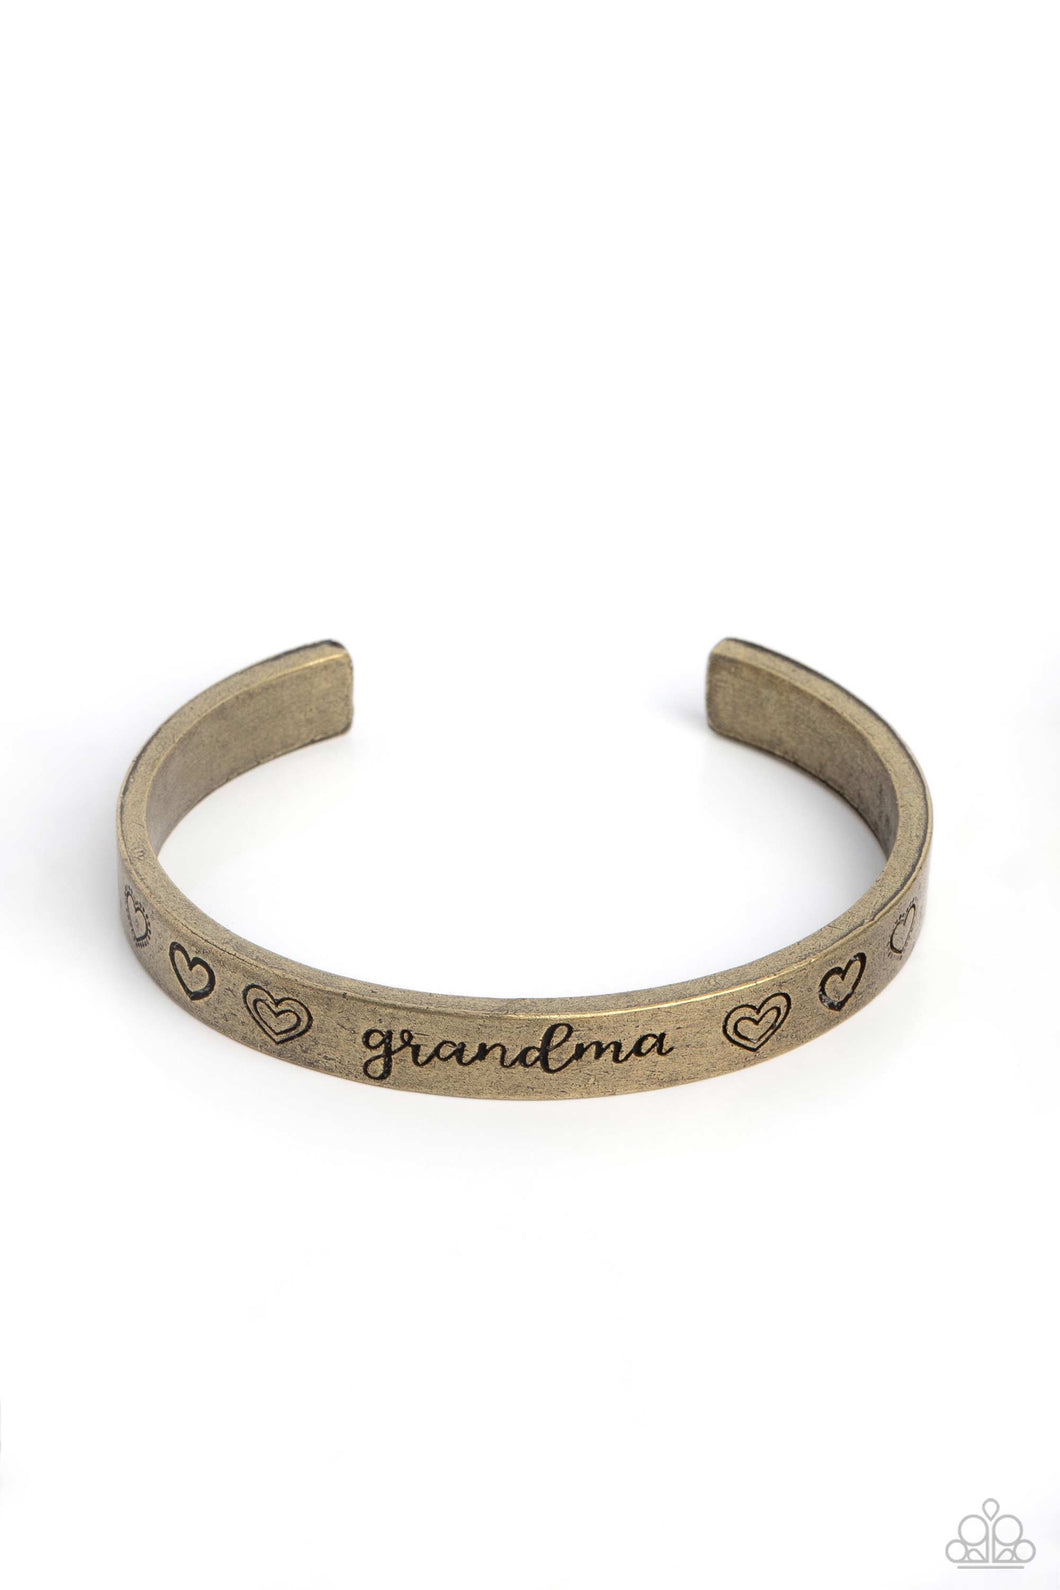 A Grandmothers Love - Brass Bracelet Coming Soon